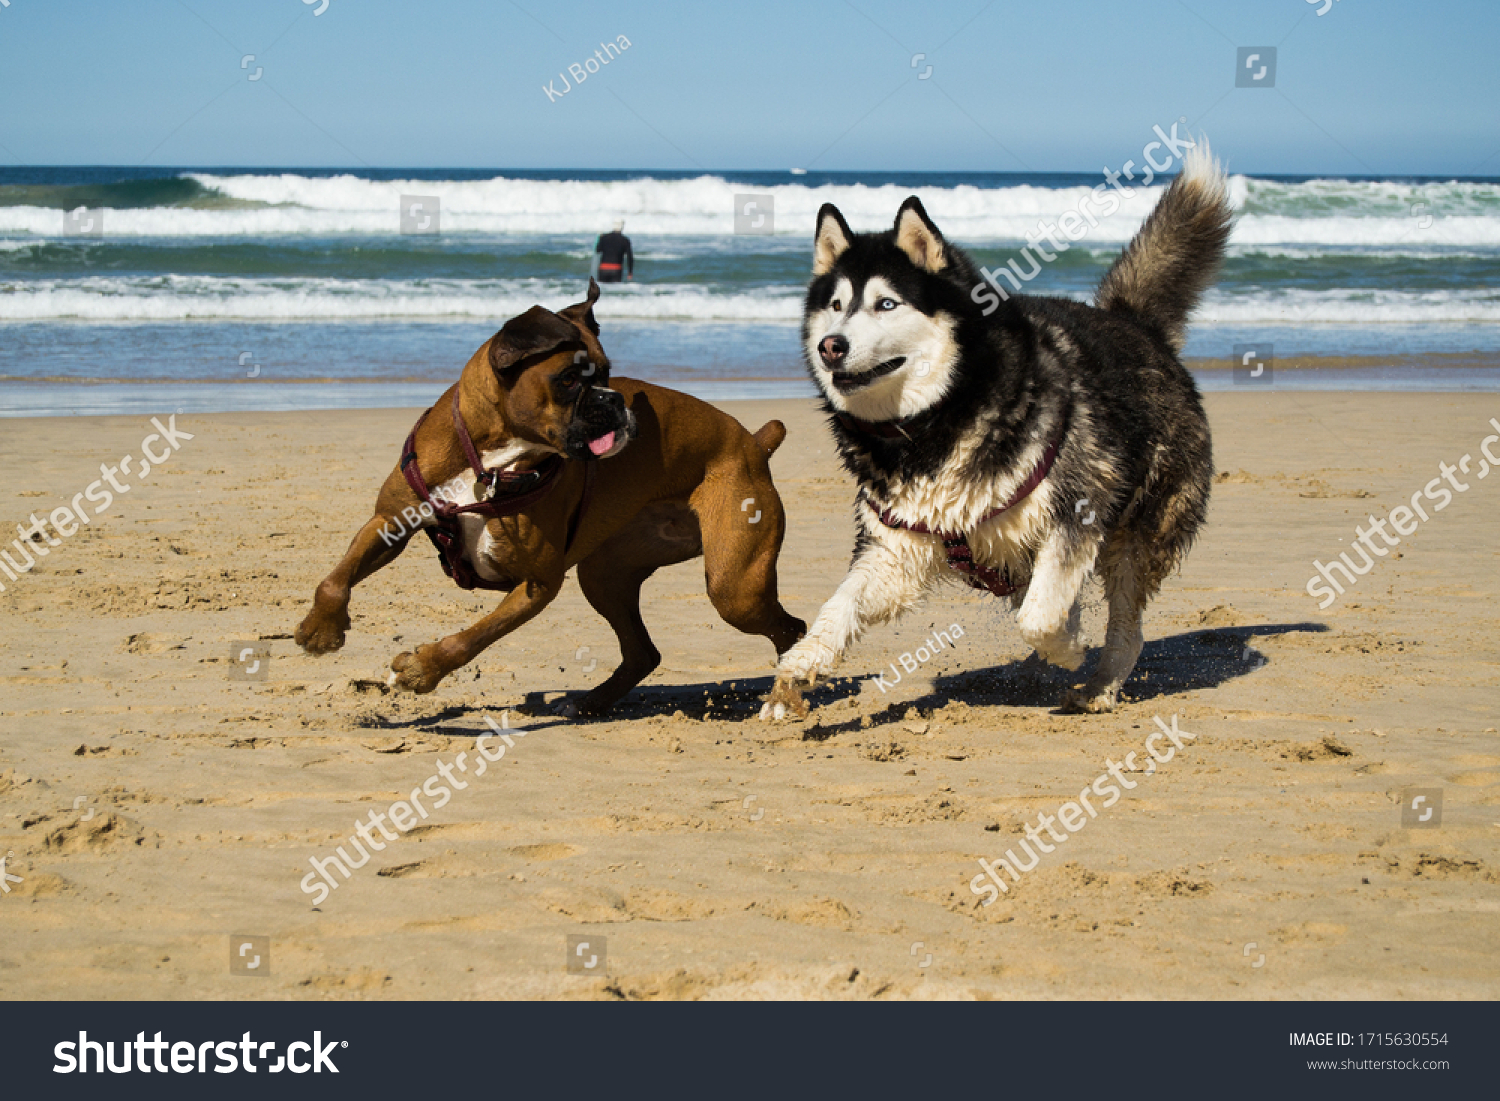 eternal Rally barricade Malinois English Bull Terrier Dogs Playing Stock Photo 284441846 |  Shutterstock